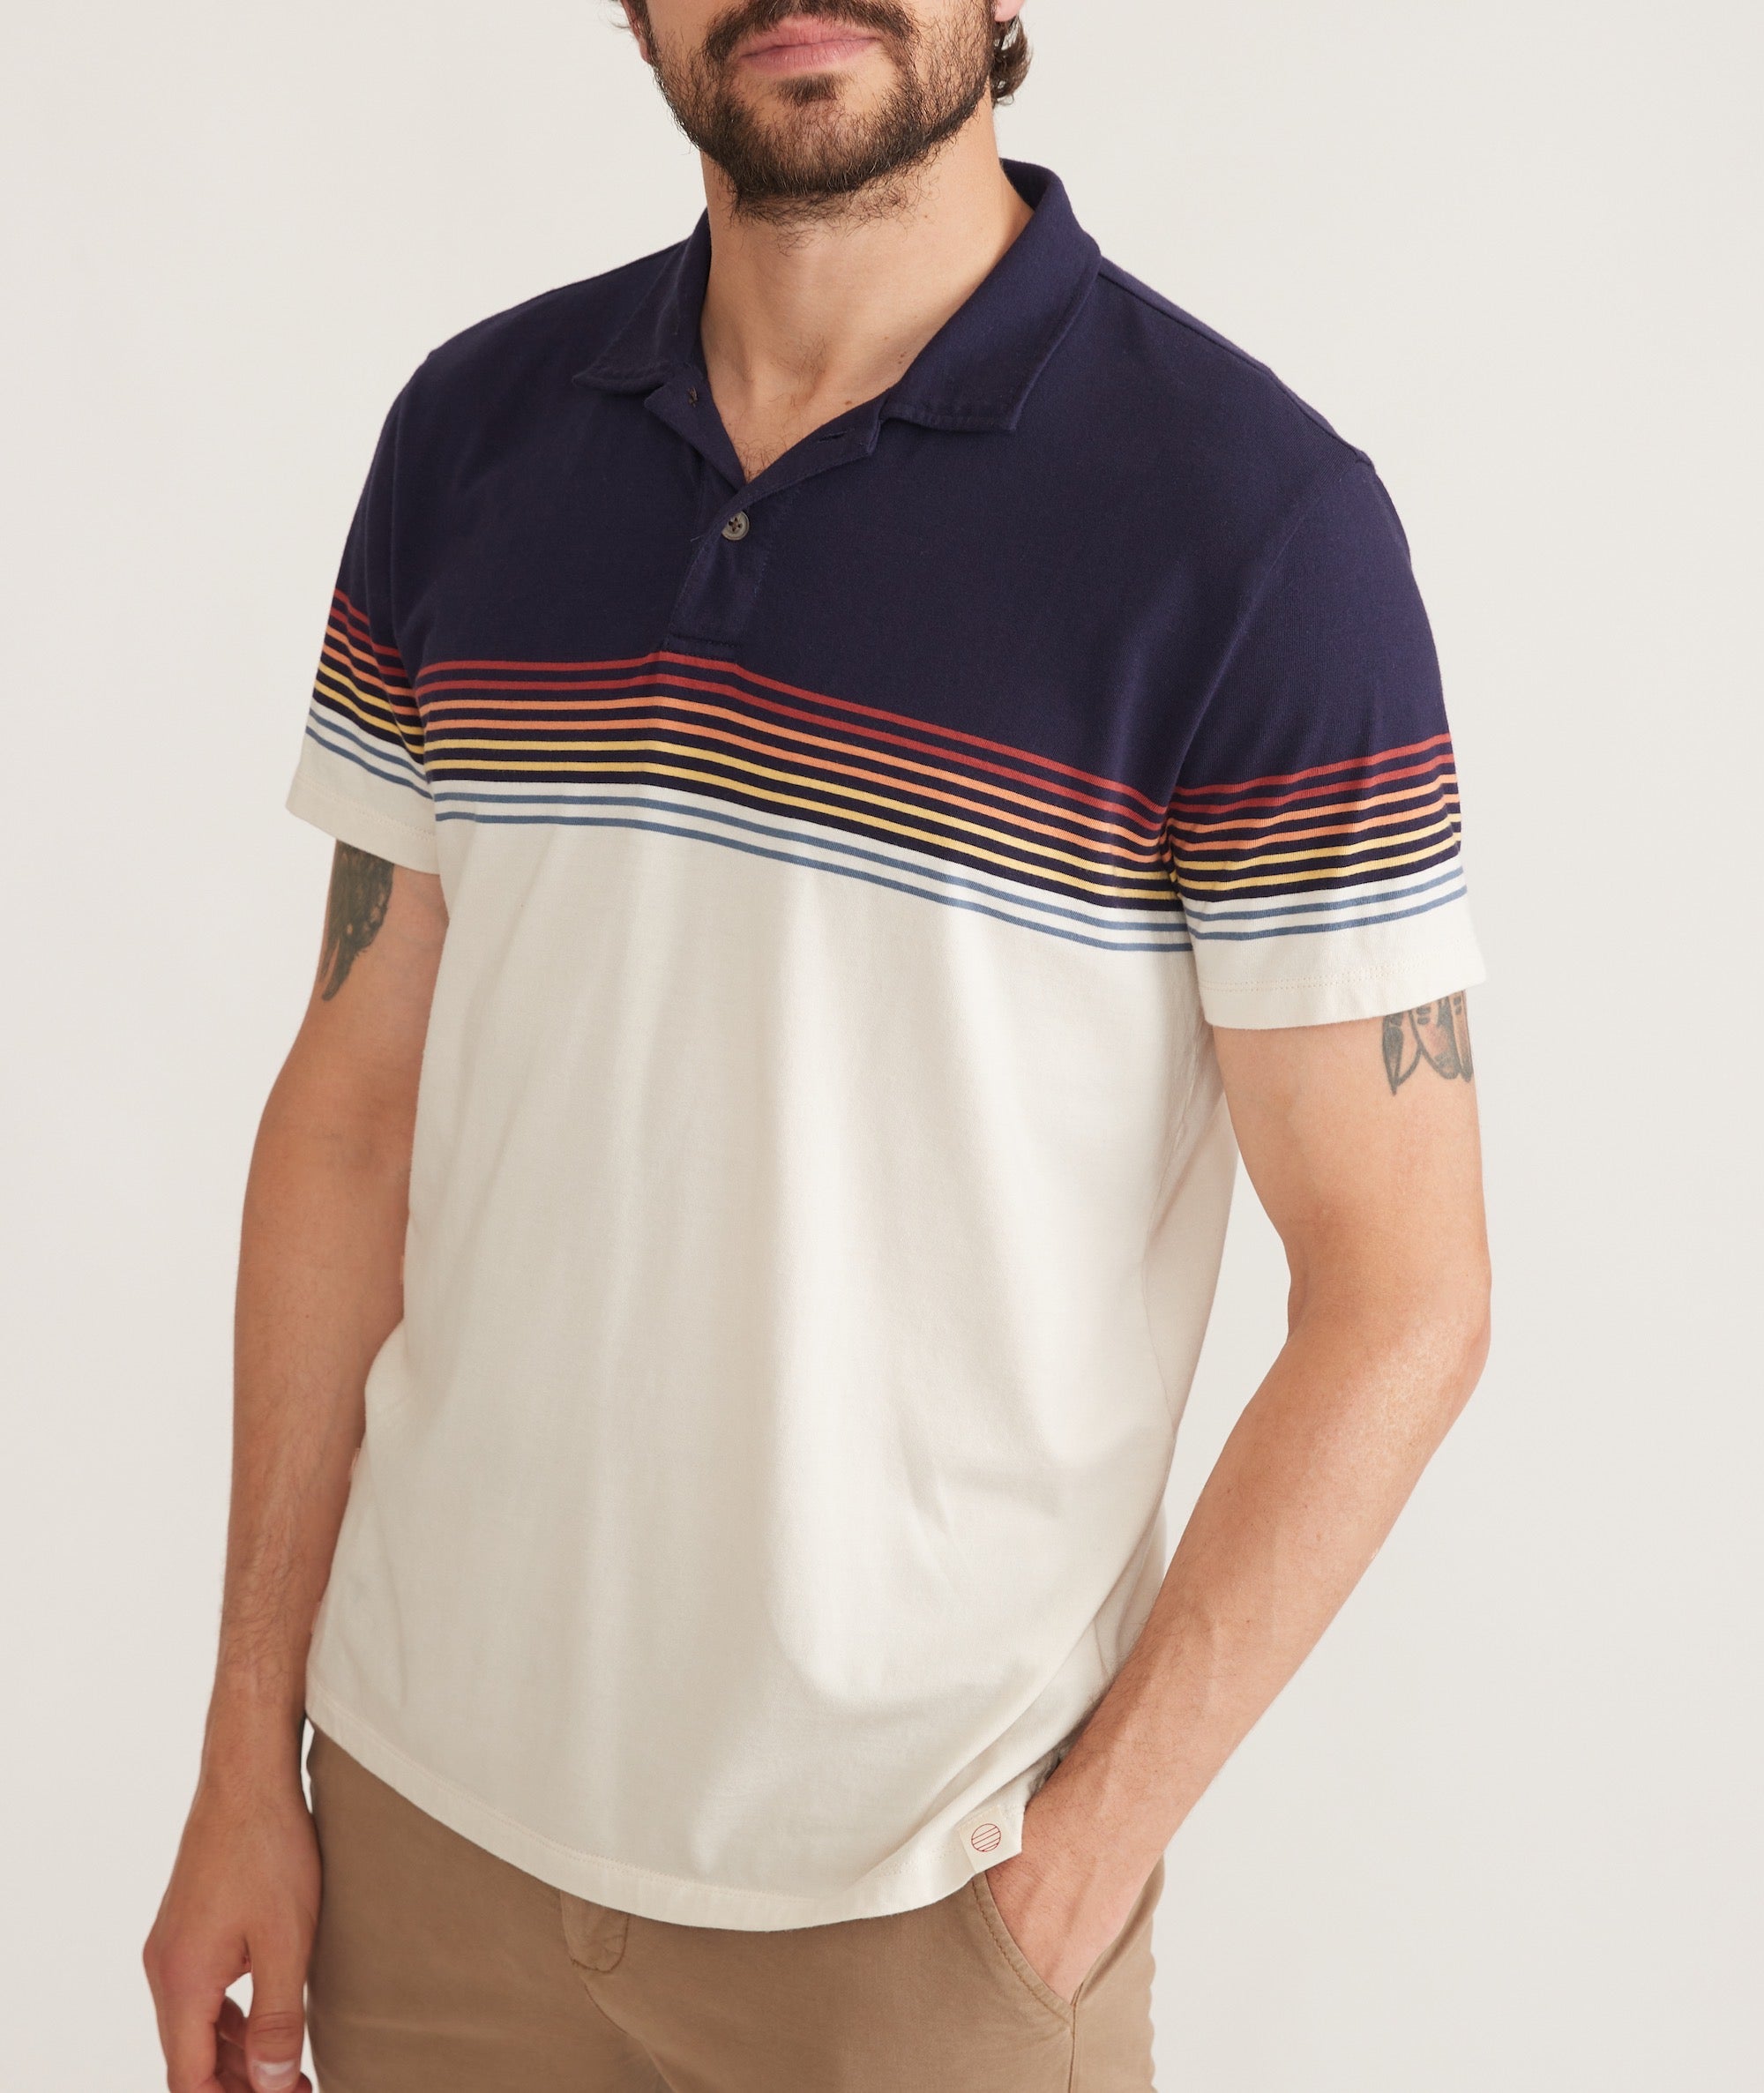 Marine Layer Men's Re-Spun High Softness Fabric Multi Stripe Polo Shirt